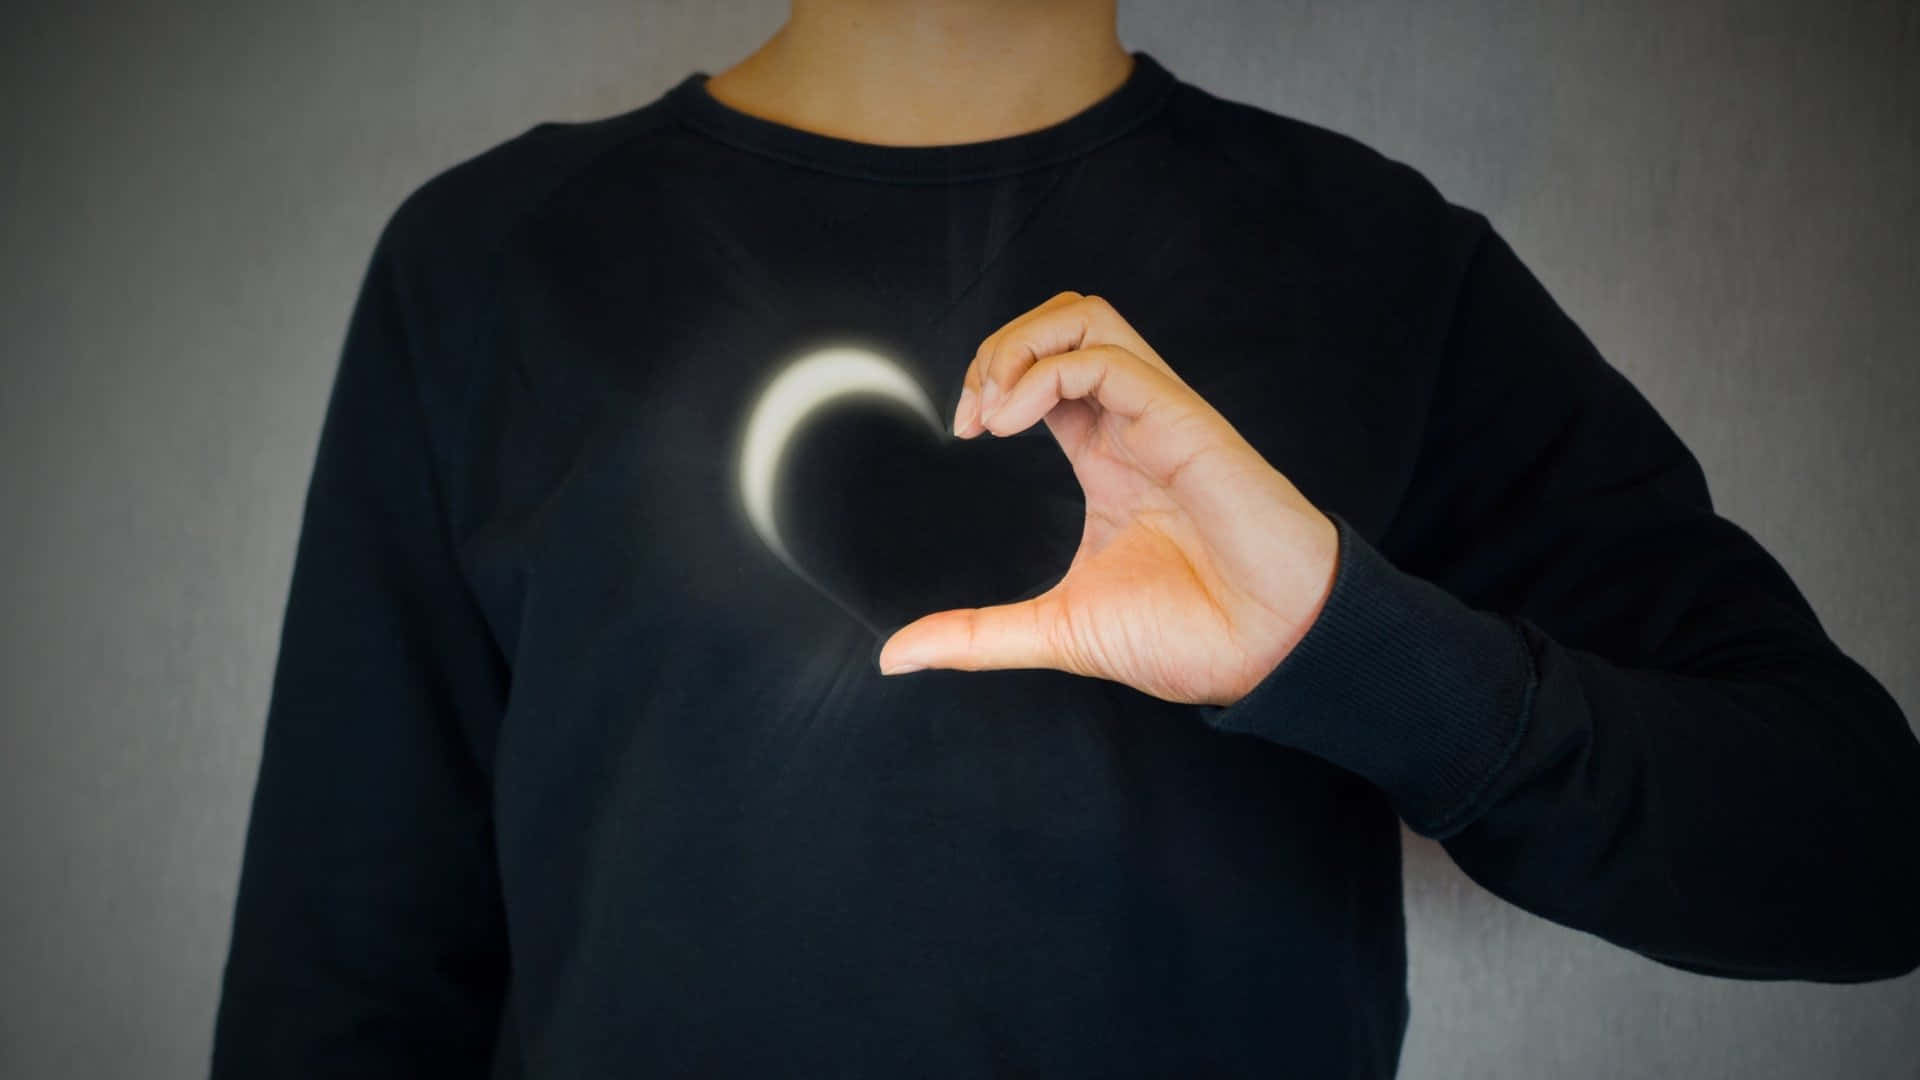 Eclipse Heart Gesture Wallpaper